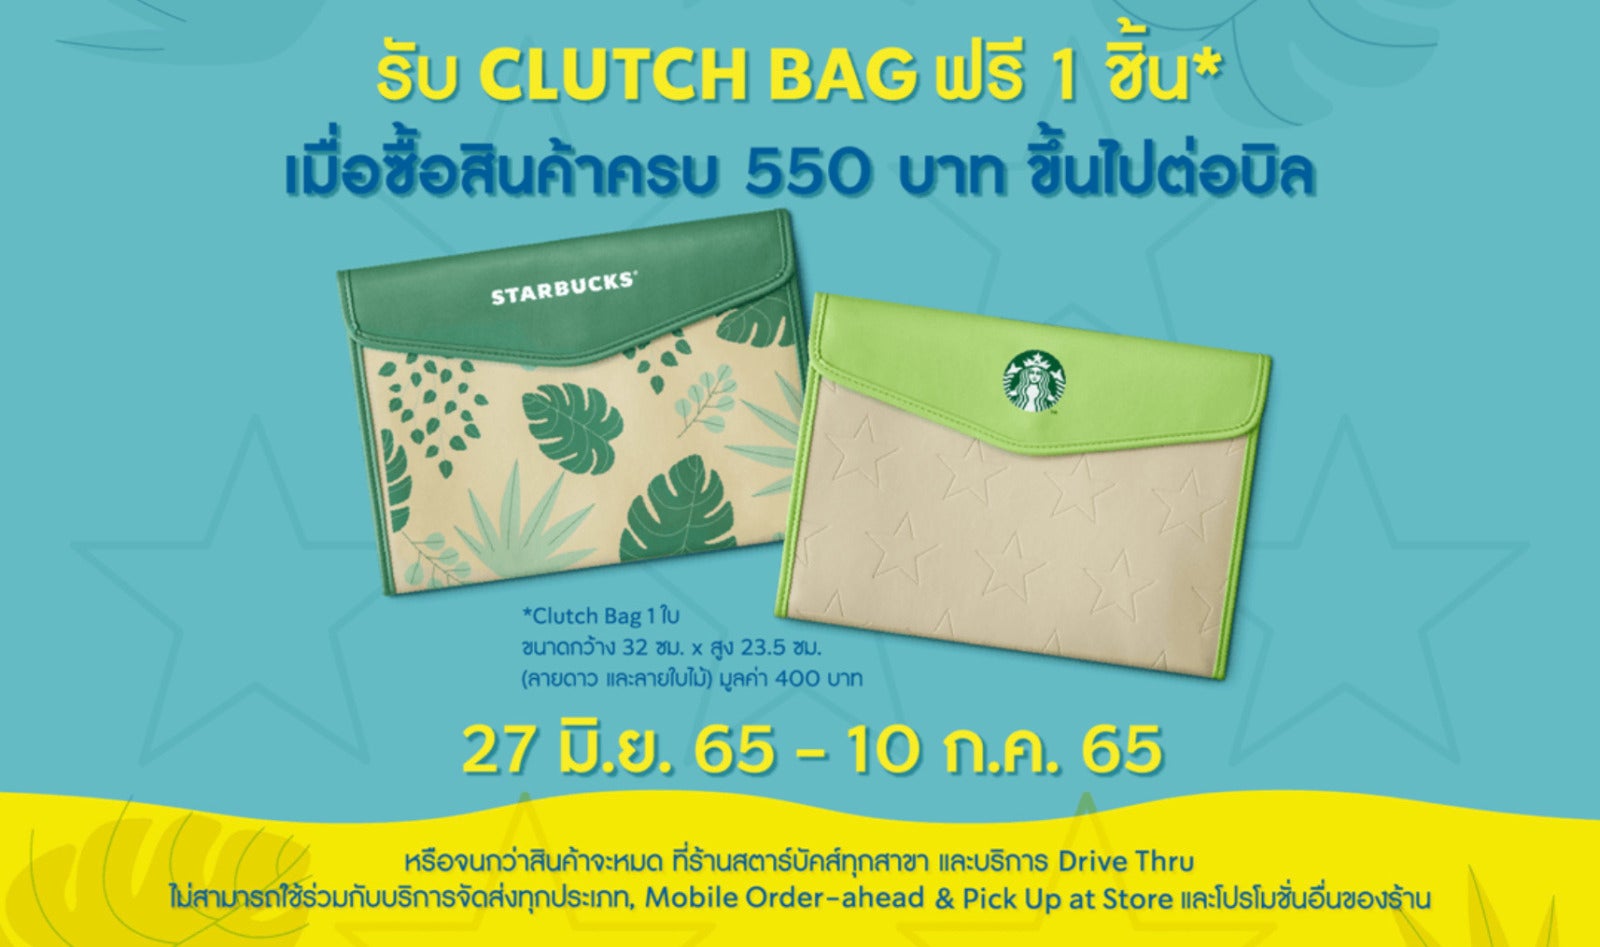 starbucks thailand Clutch Bag